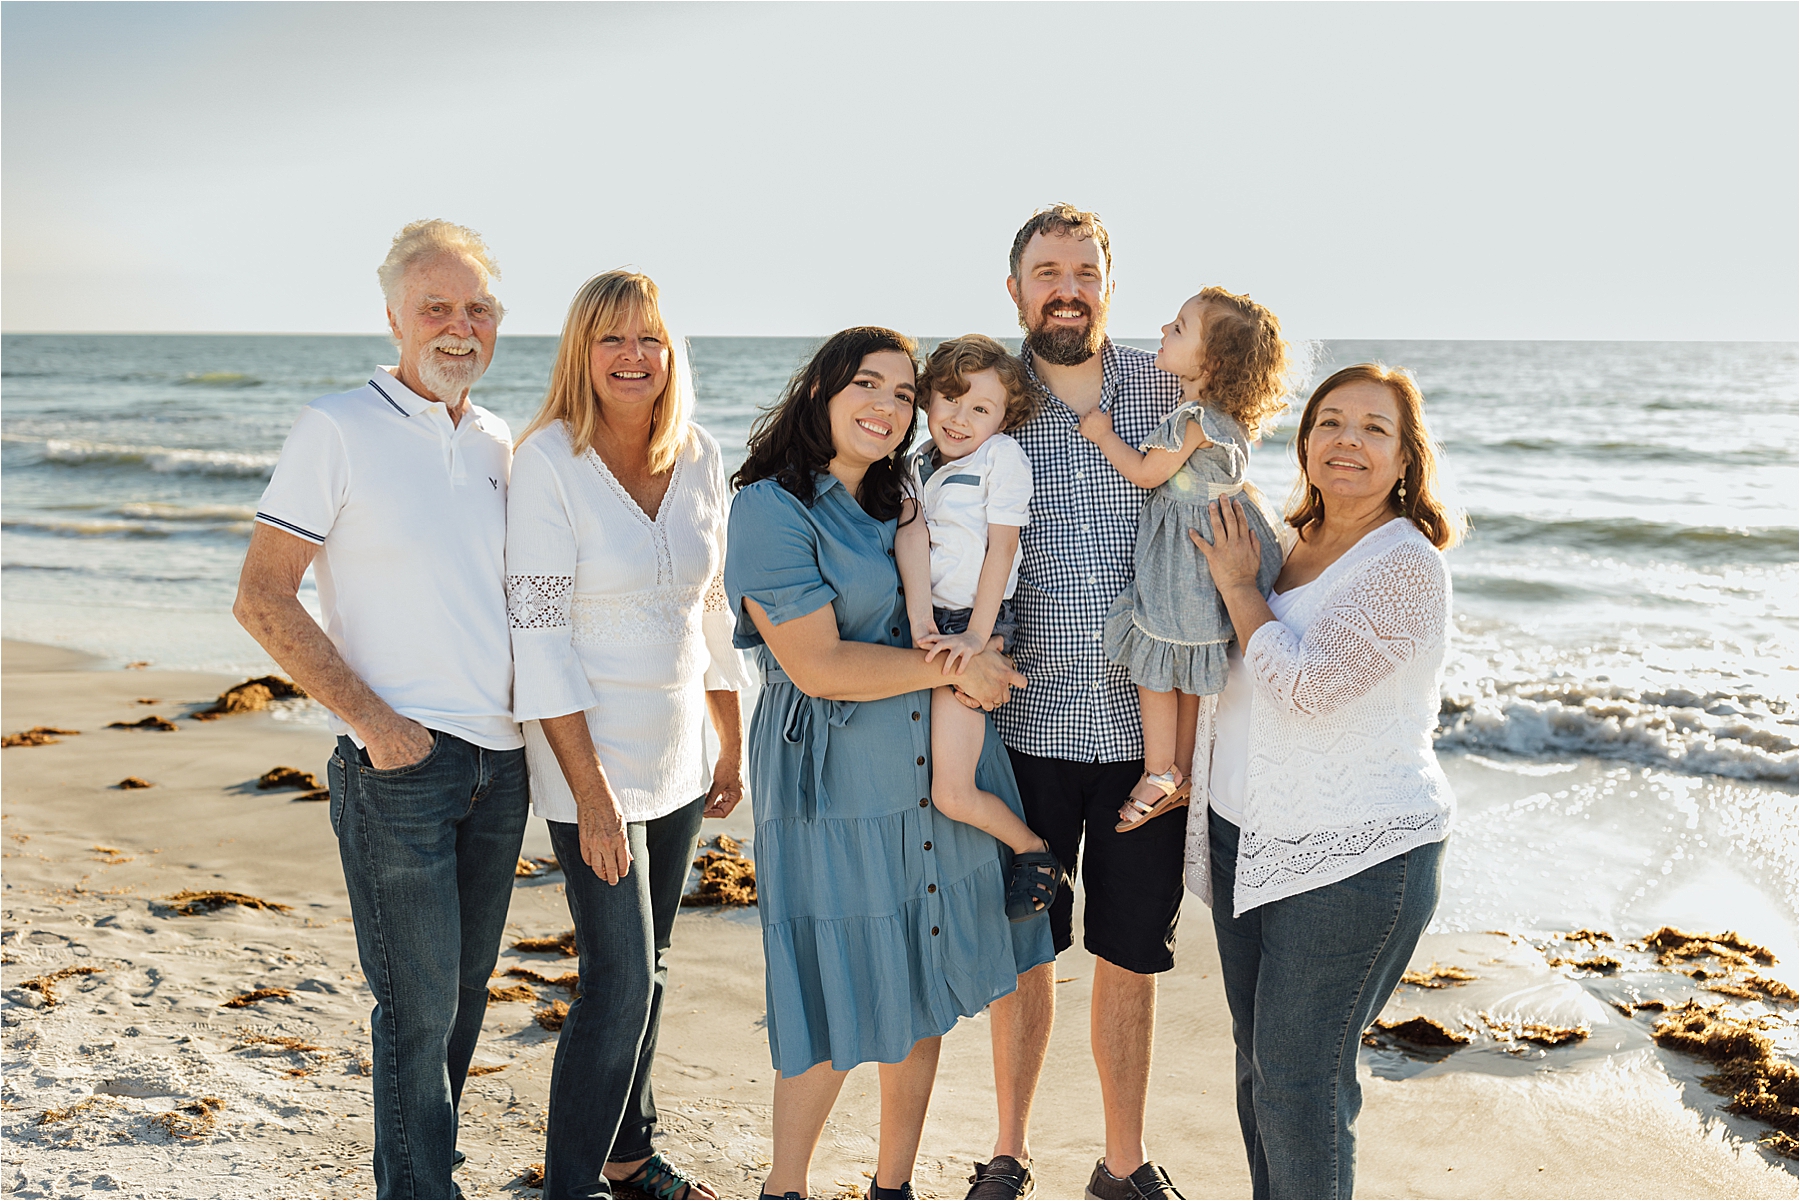 The Schlesselman Family's Annual Photoshoot